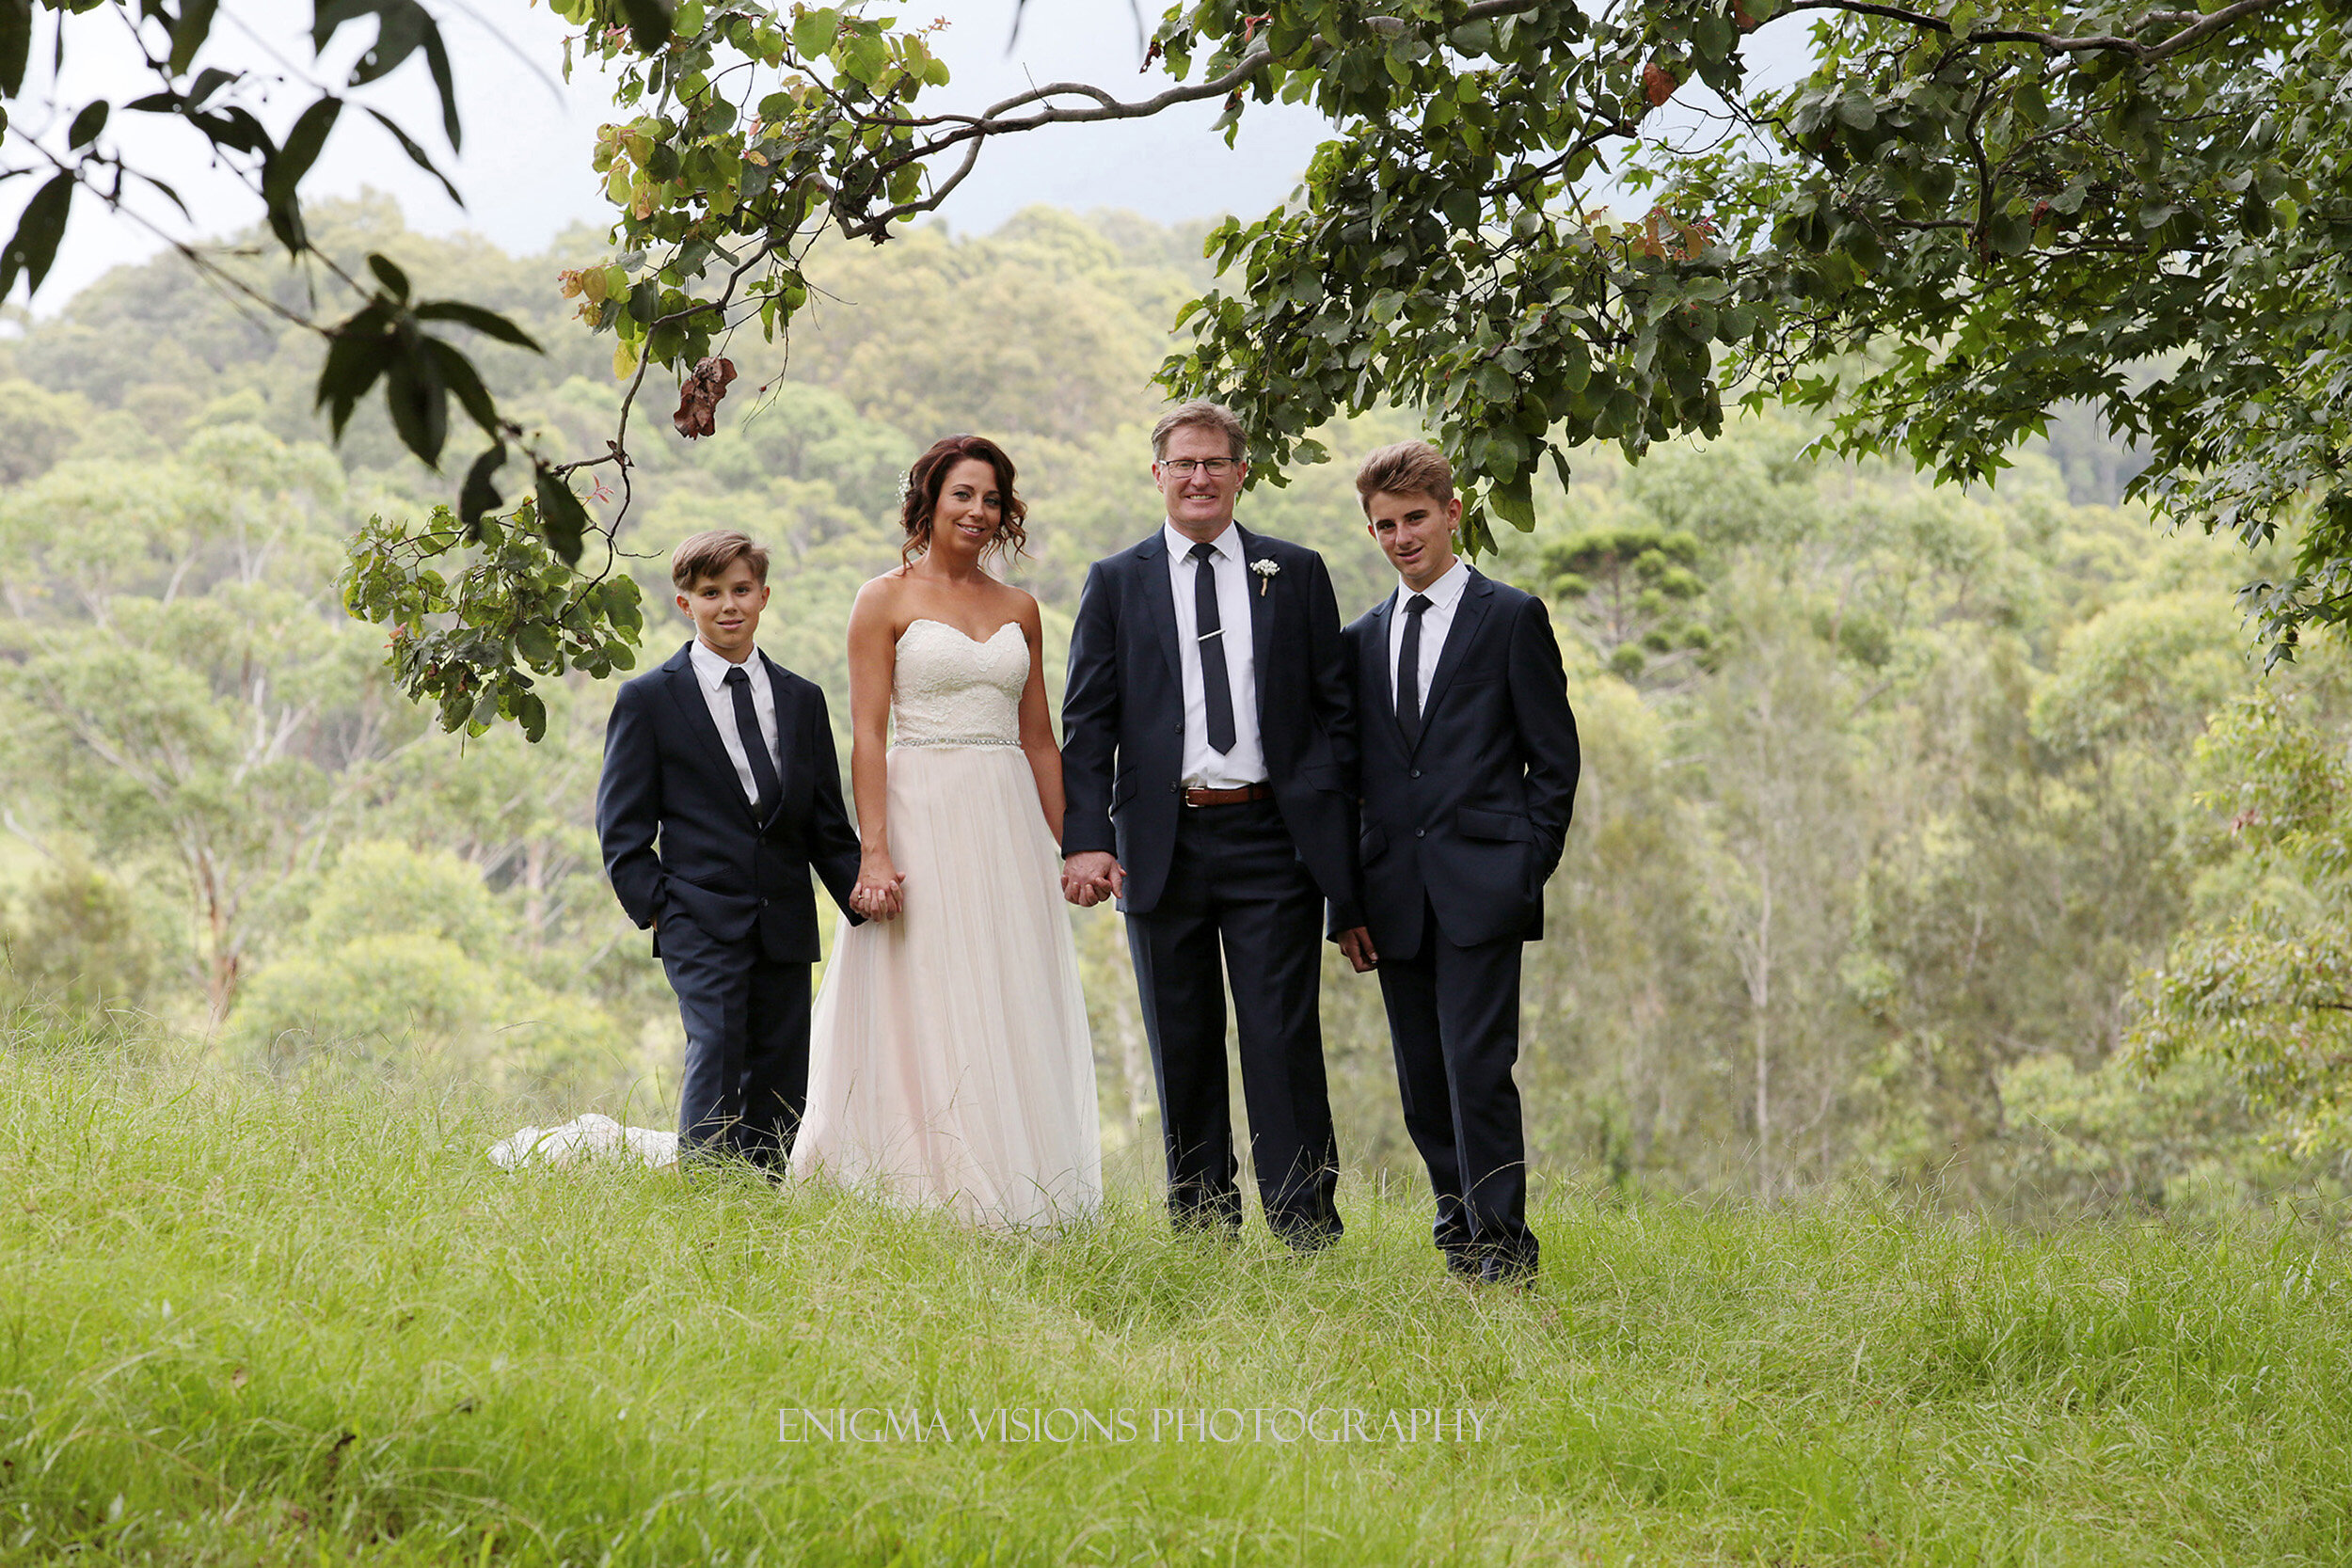 enigma_visions_photography_wedding-Belinda+Howard (52).jpg